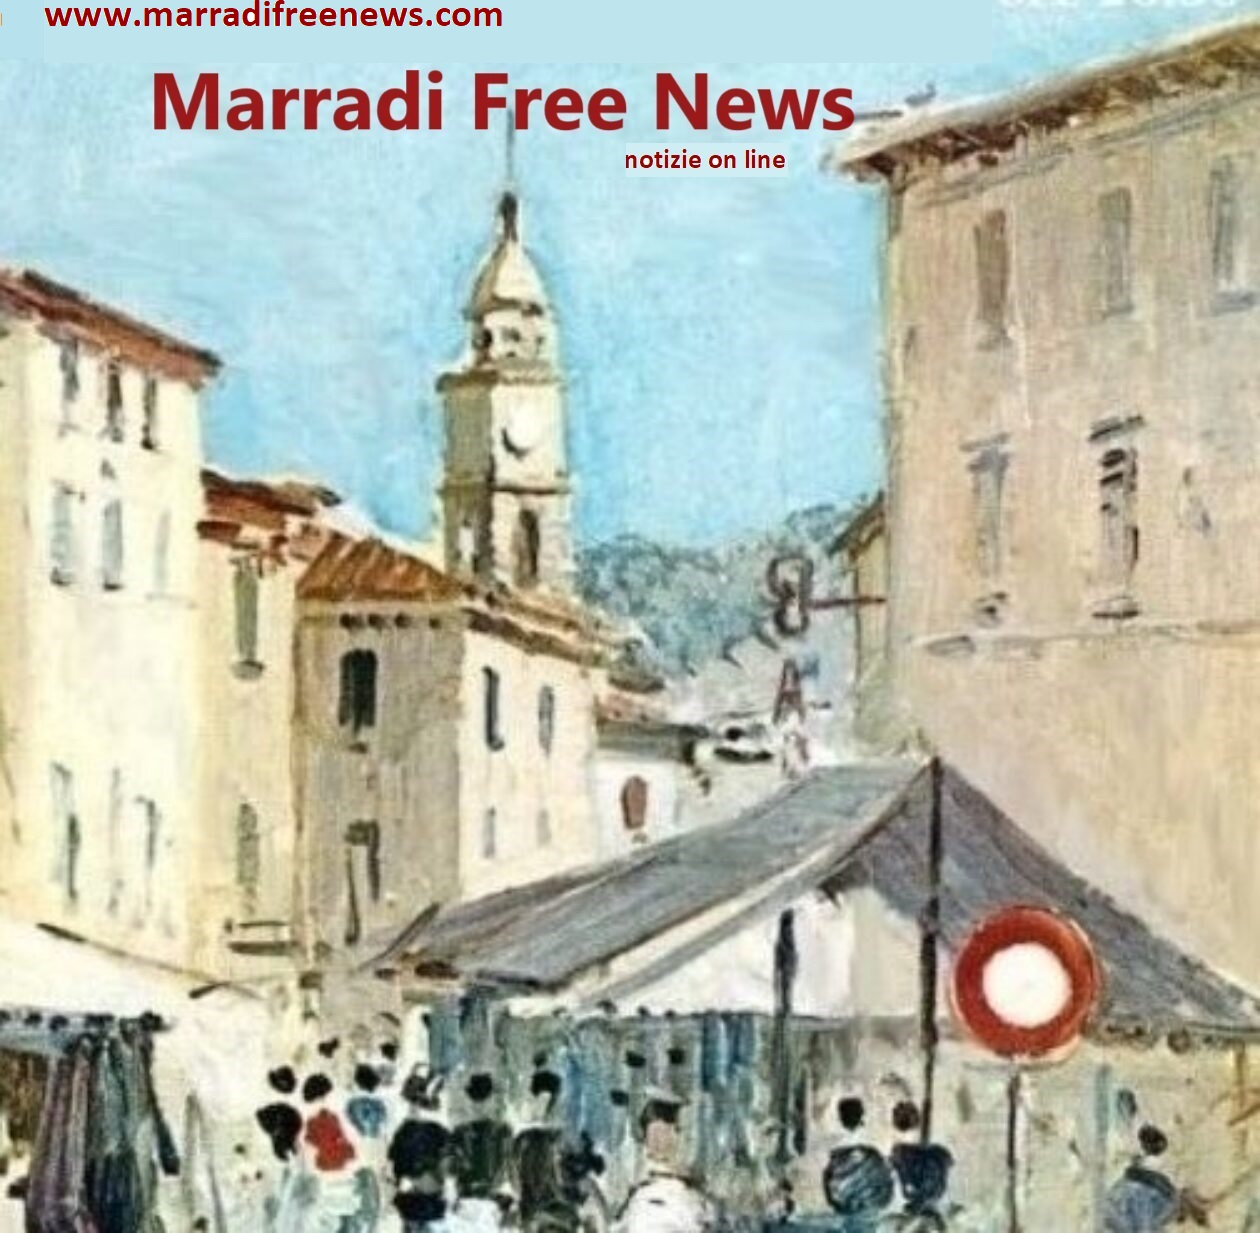 MARRADI FREE NEWS